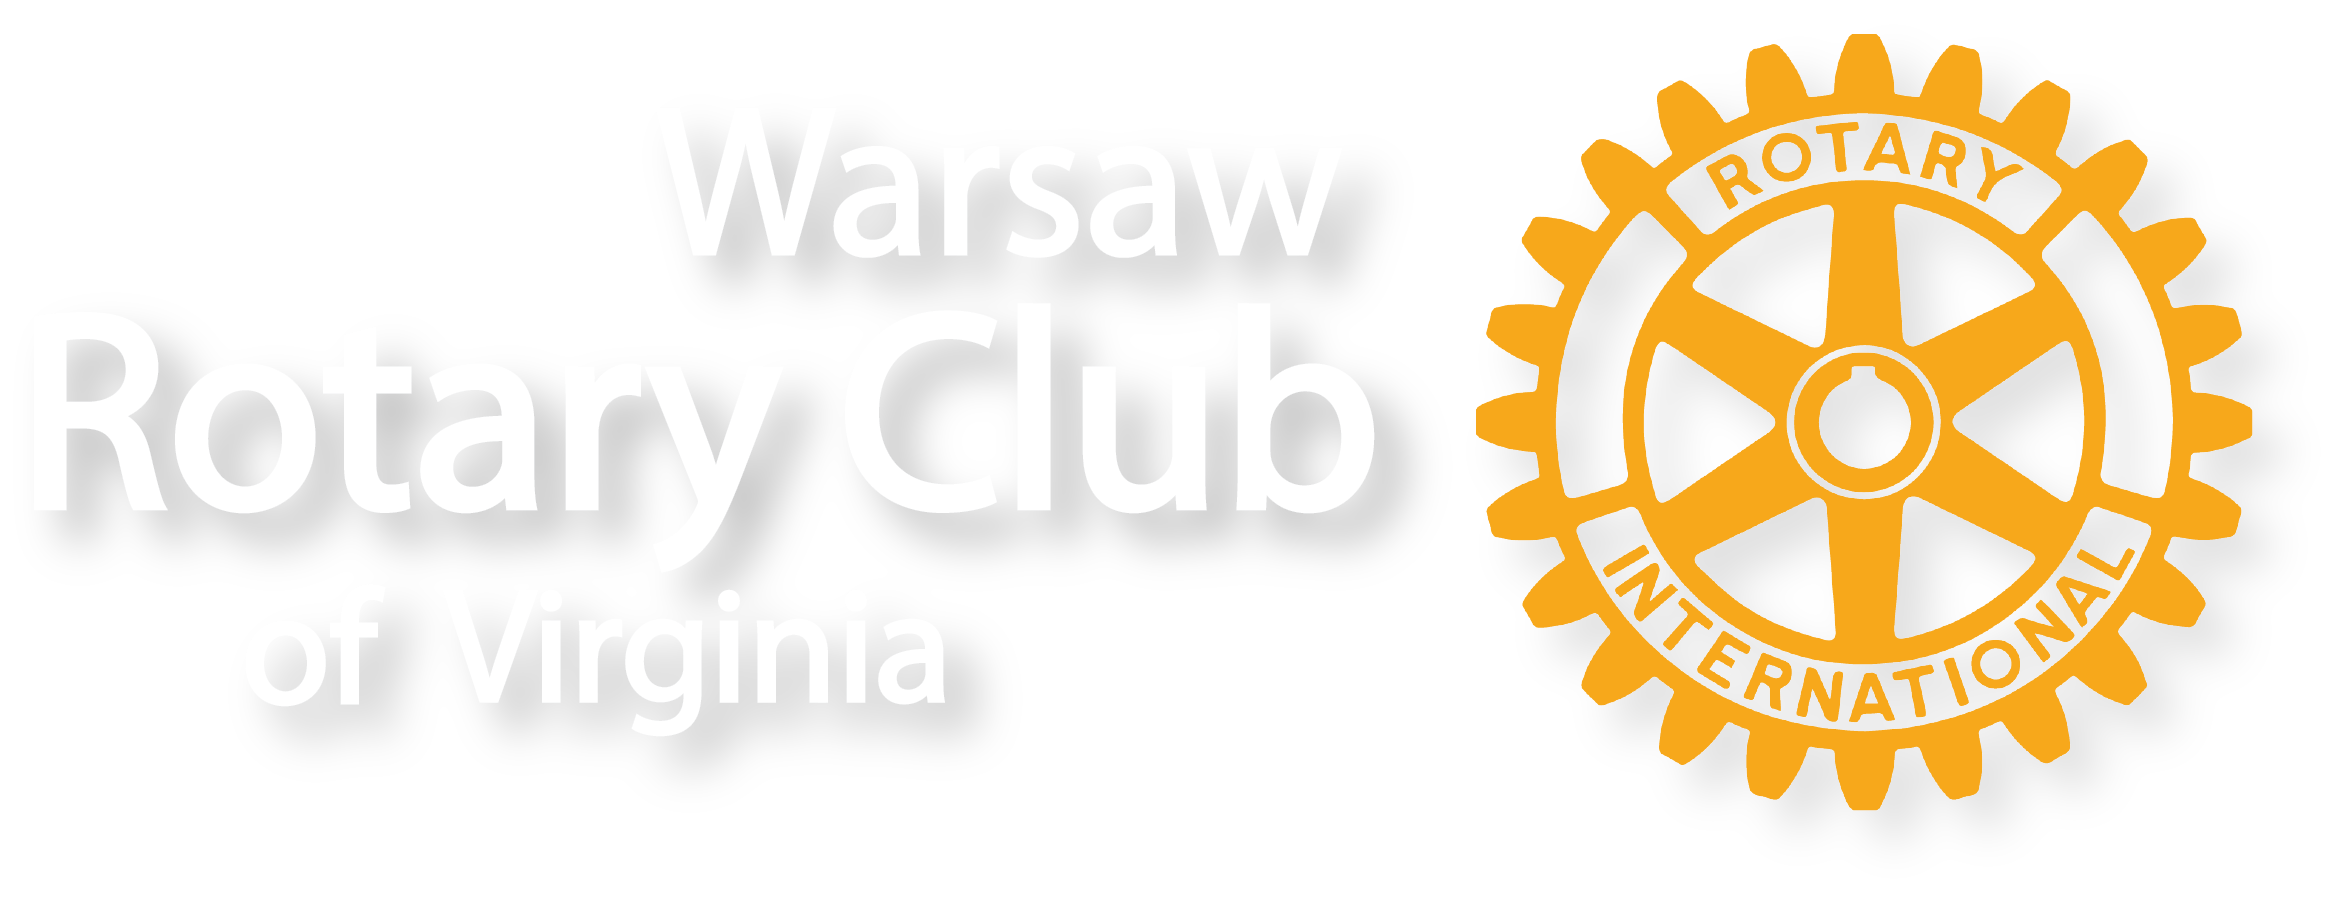 Warsaw Rotary Club of Virginia